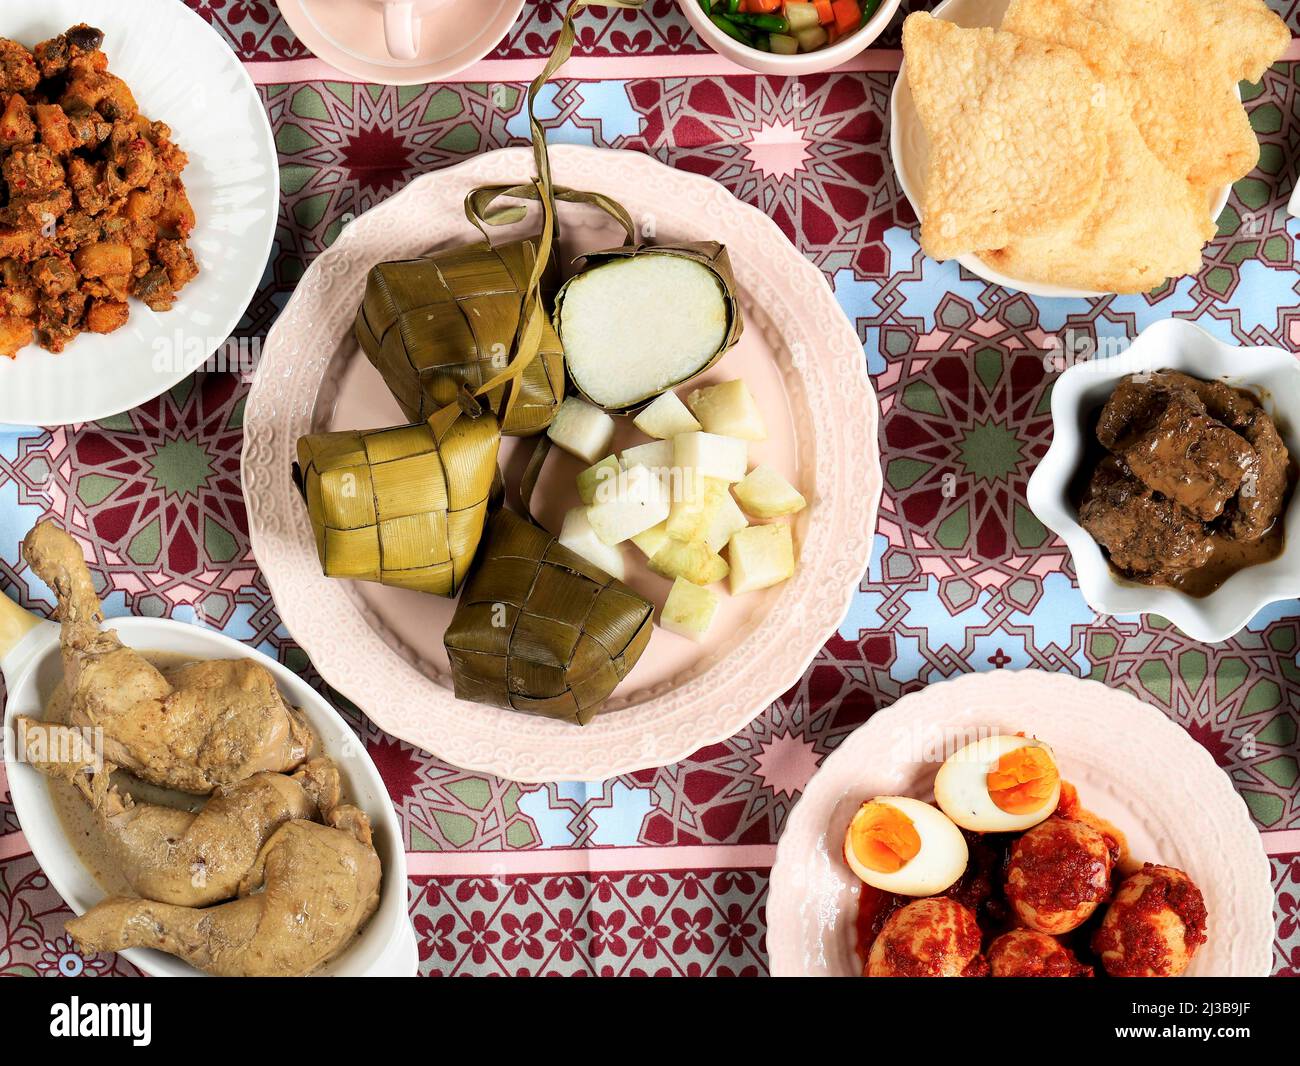 Ketupat Lebaran. Traditional Celebratory Dish of Rice Cake or Ketupat with Various Side Dishes, Popular Served During Eid Celebrations. Stock Photo